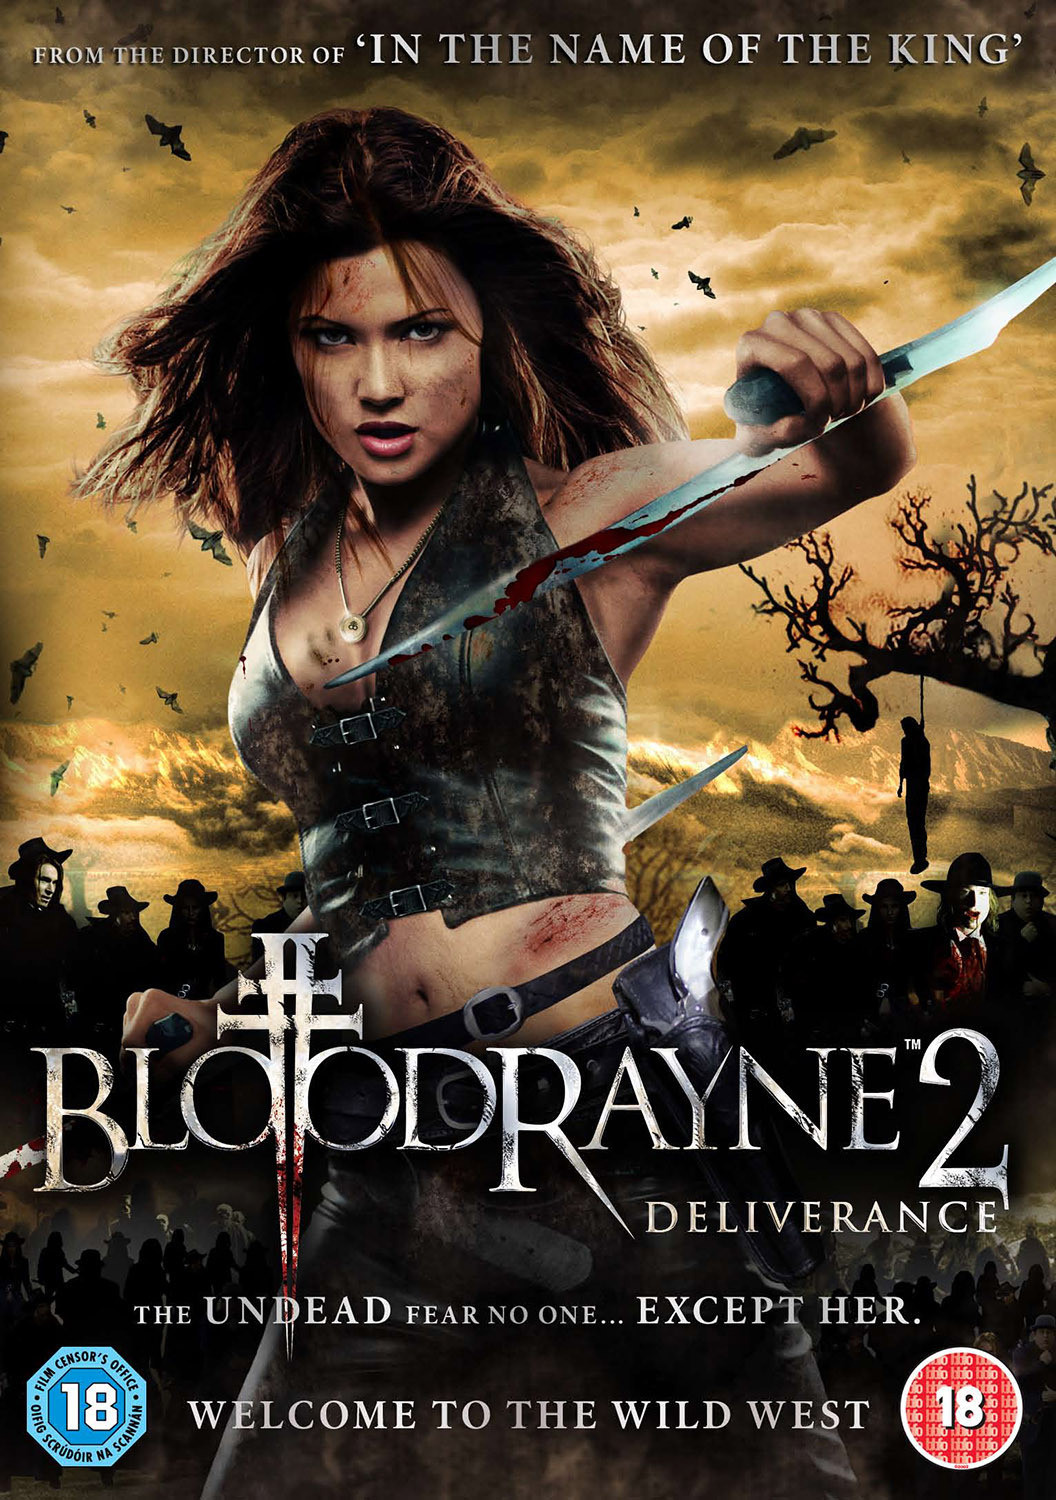 Stiahni si Filmy CZ/SK dabing BloodRayne 2: Vykoupeni / BloodRayne II: Deliverance (2007)(CZ) = CSFD 17%